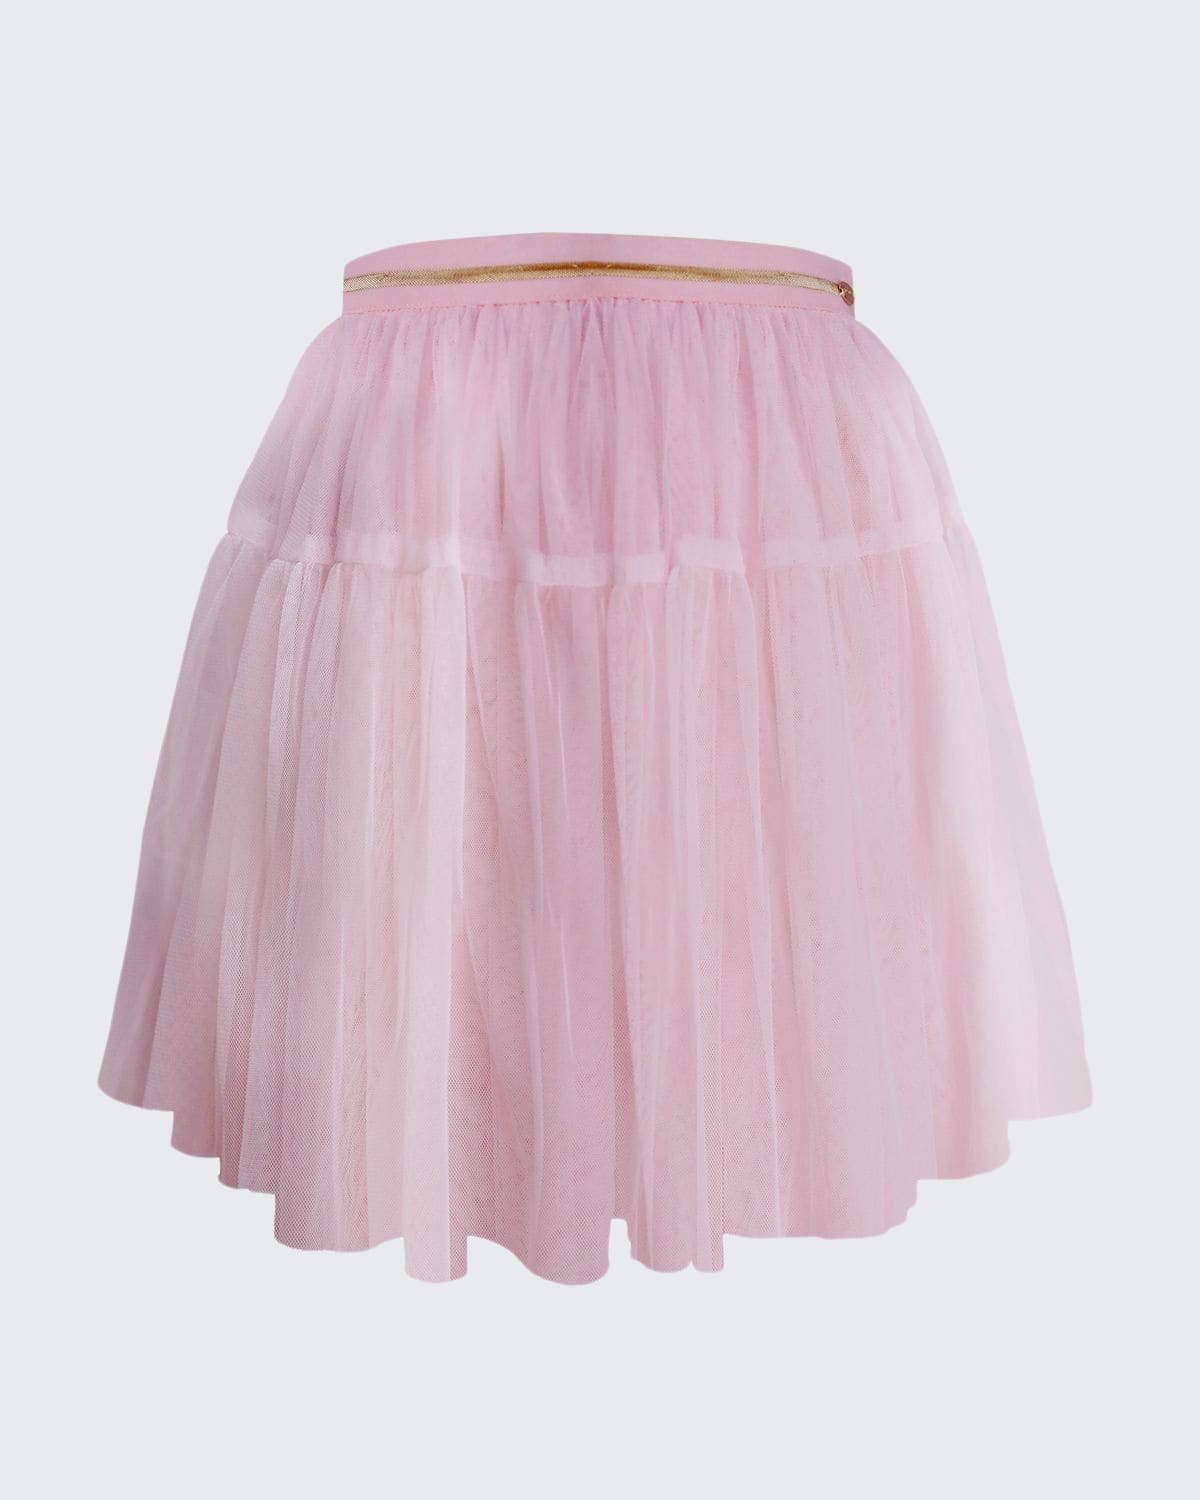 Island Kids & Kids Isle Girl's Glitter Striped Tulle Skirt, Size 4-12